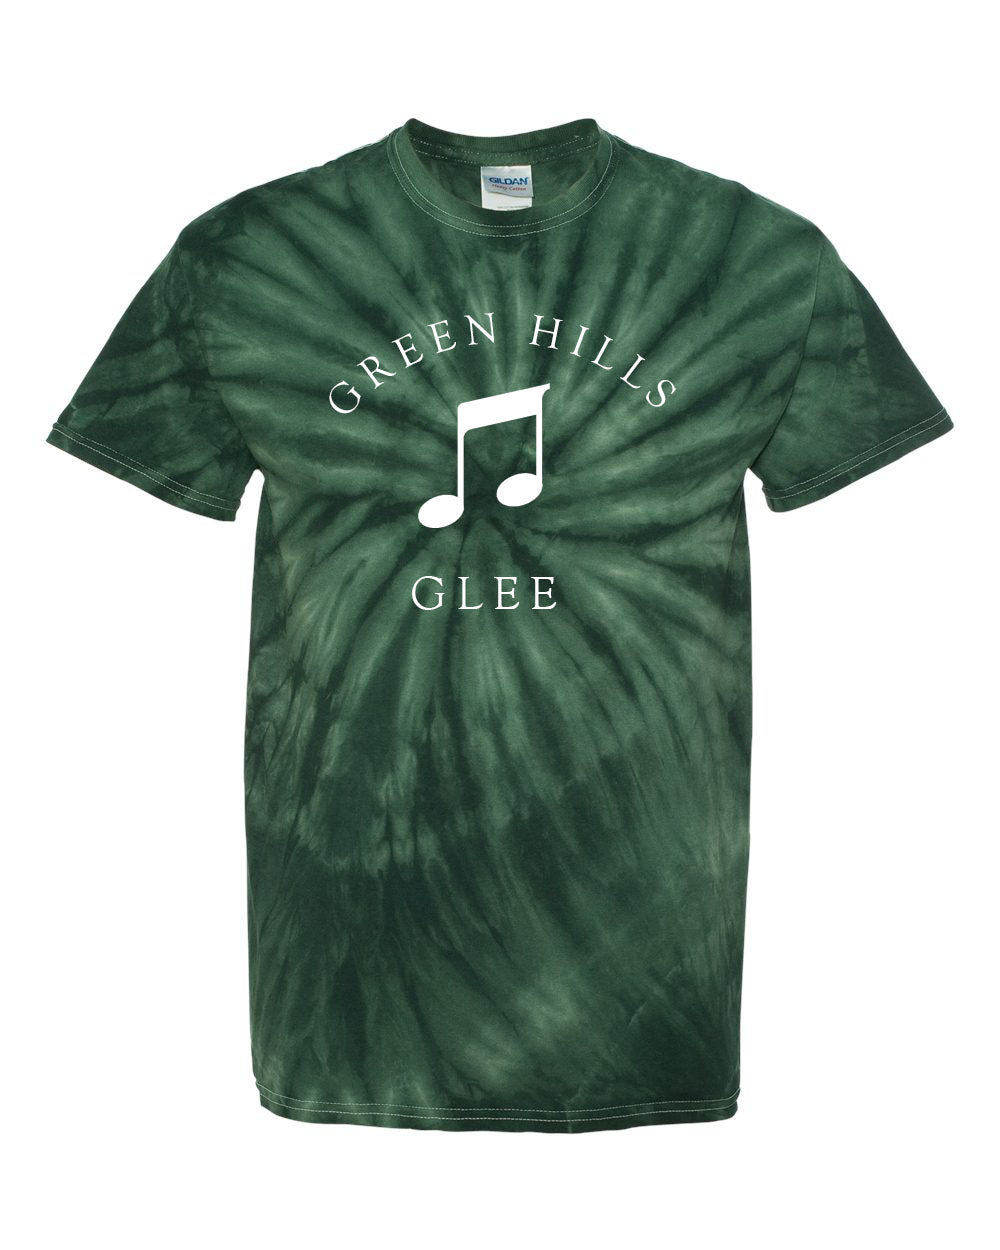 Green Hills Design 10 Tie Dye t-shirt